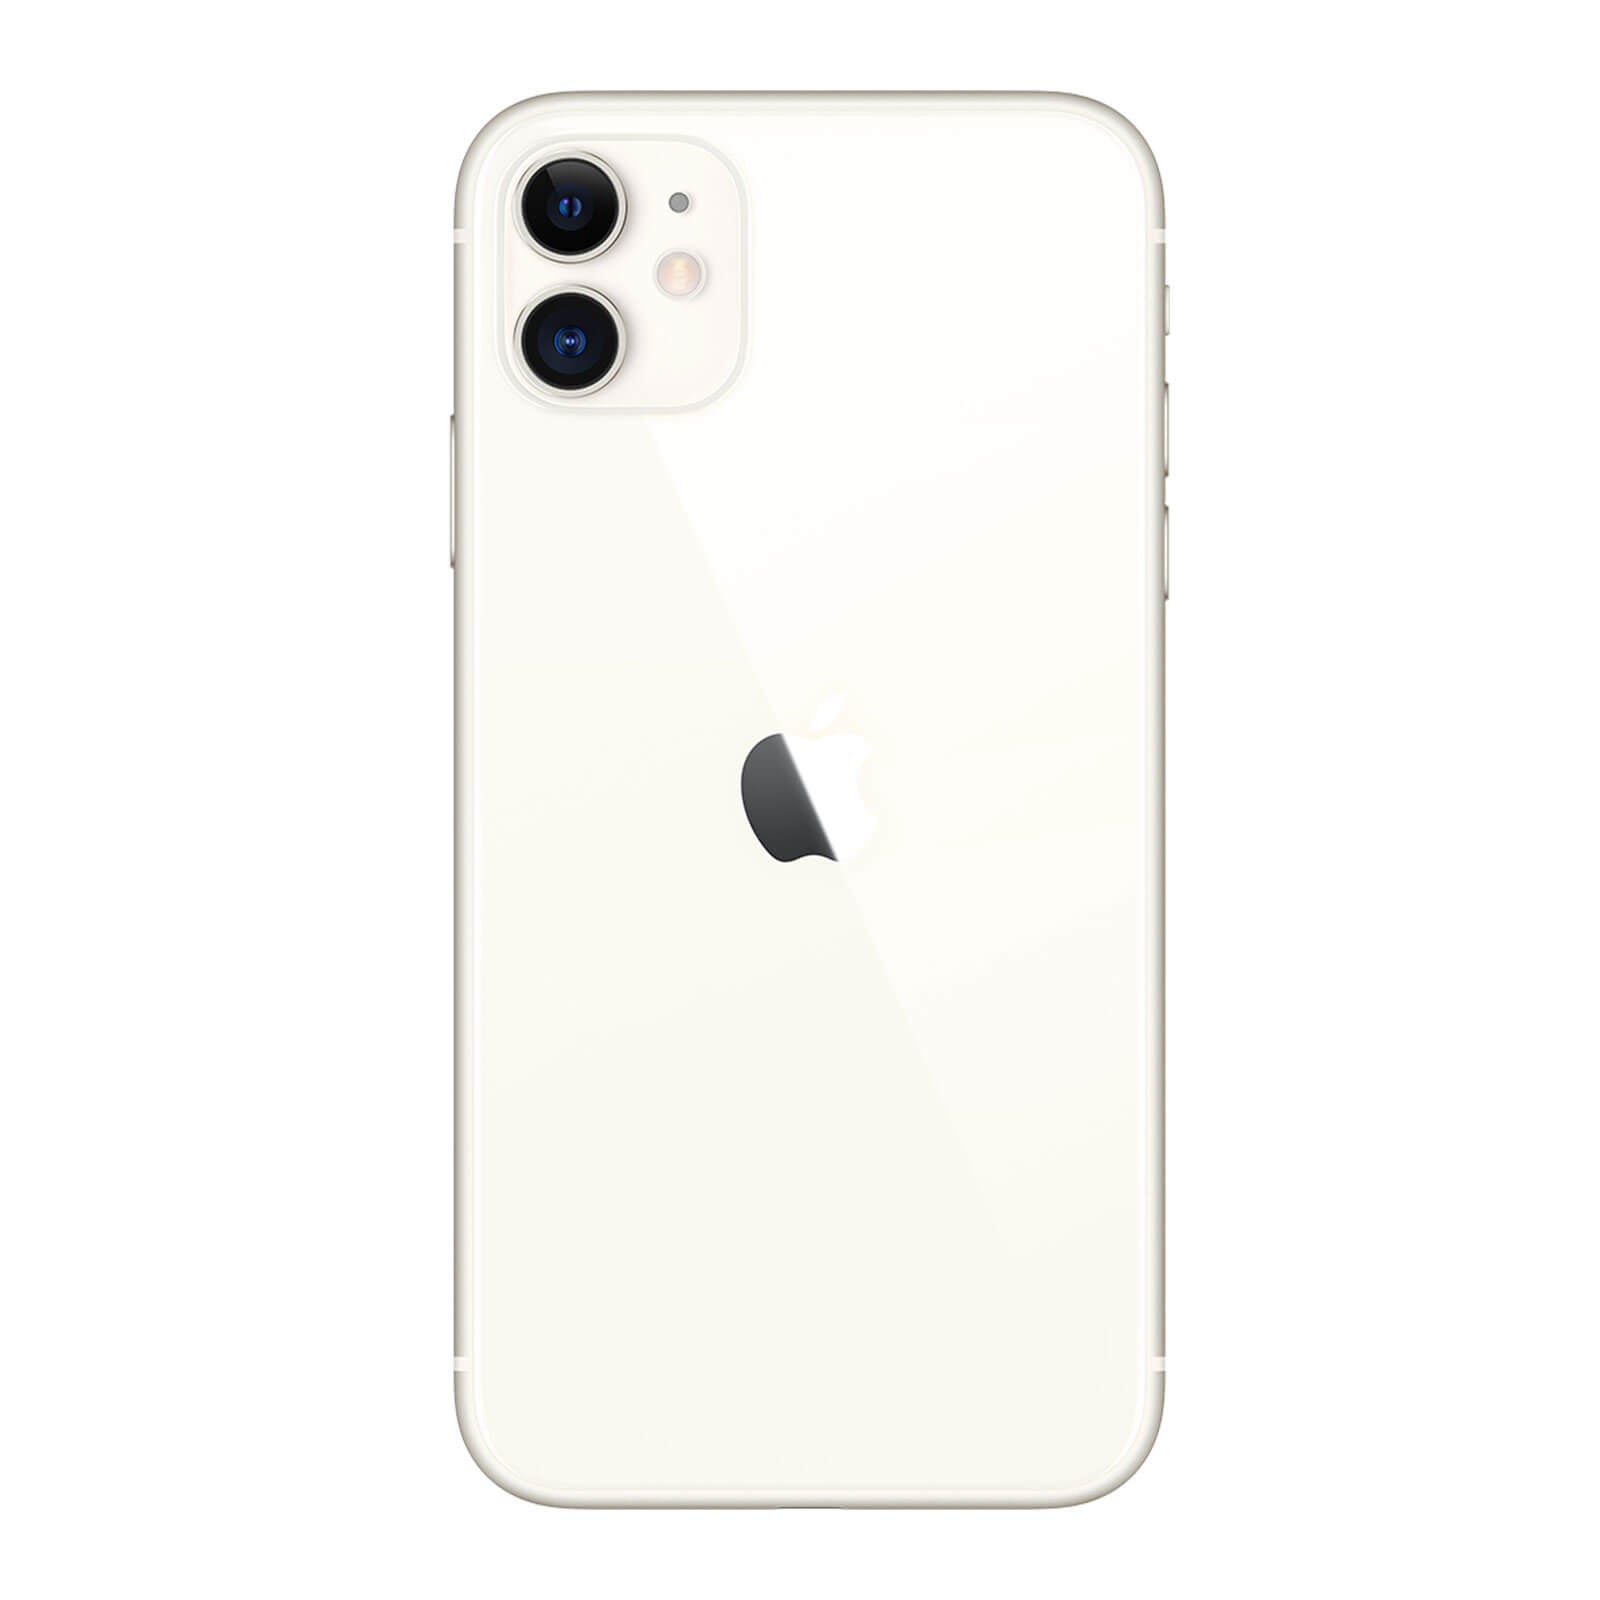 Apple iPhone 11 128GB White Fair - Verizon